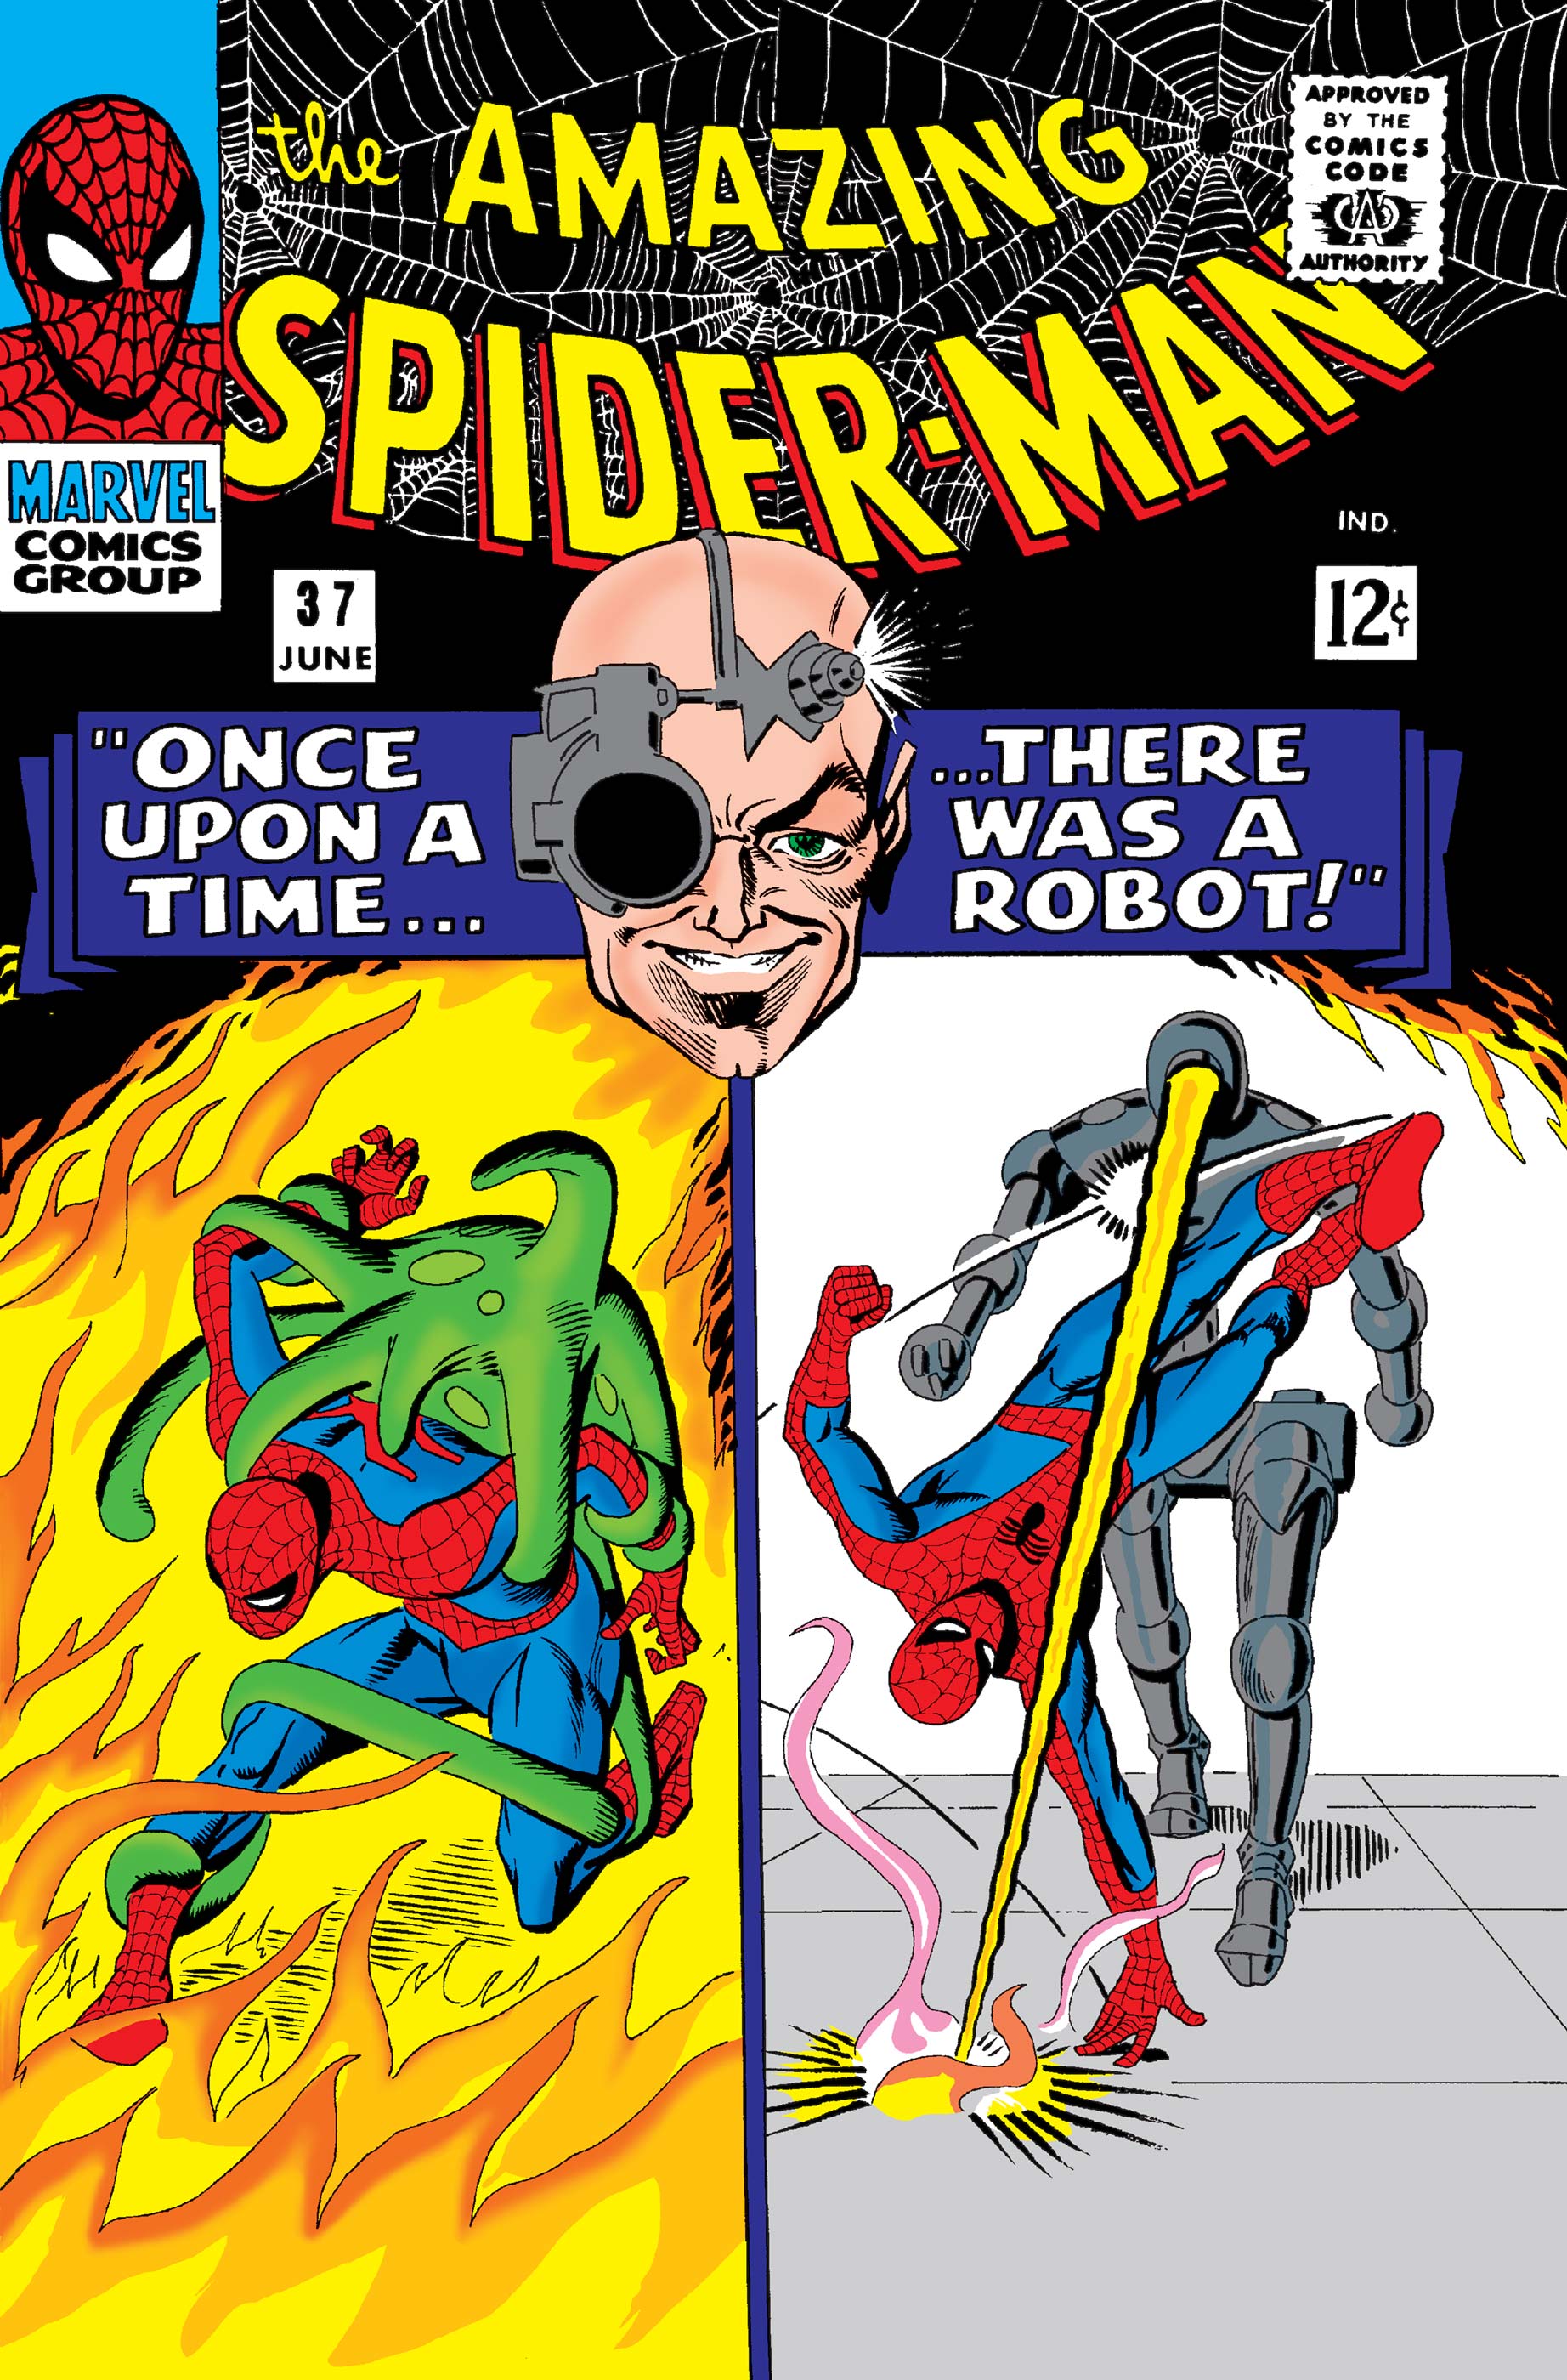 Amazing Spiderman #37 FRIDGE MAGNET comic book 